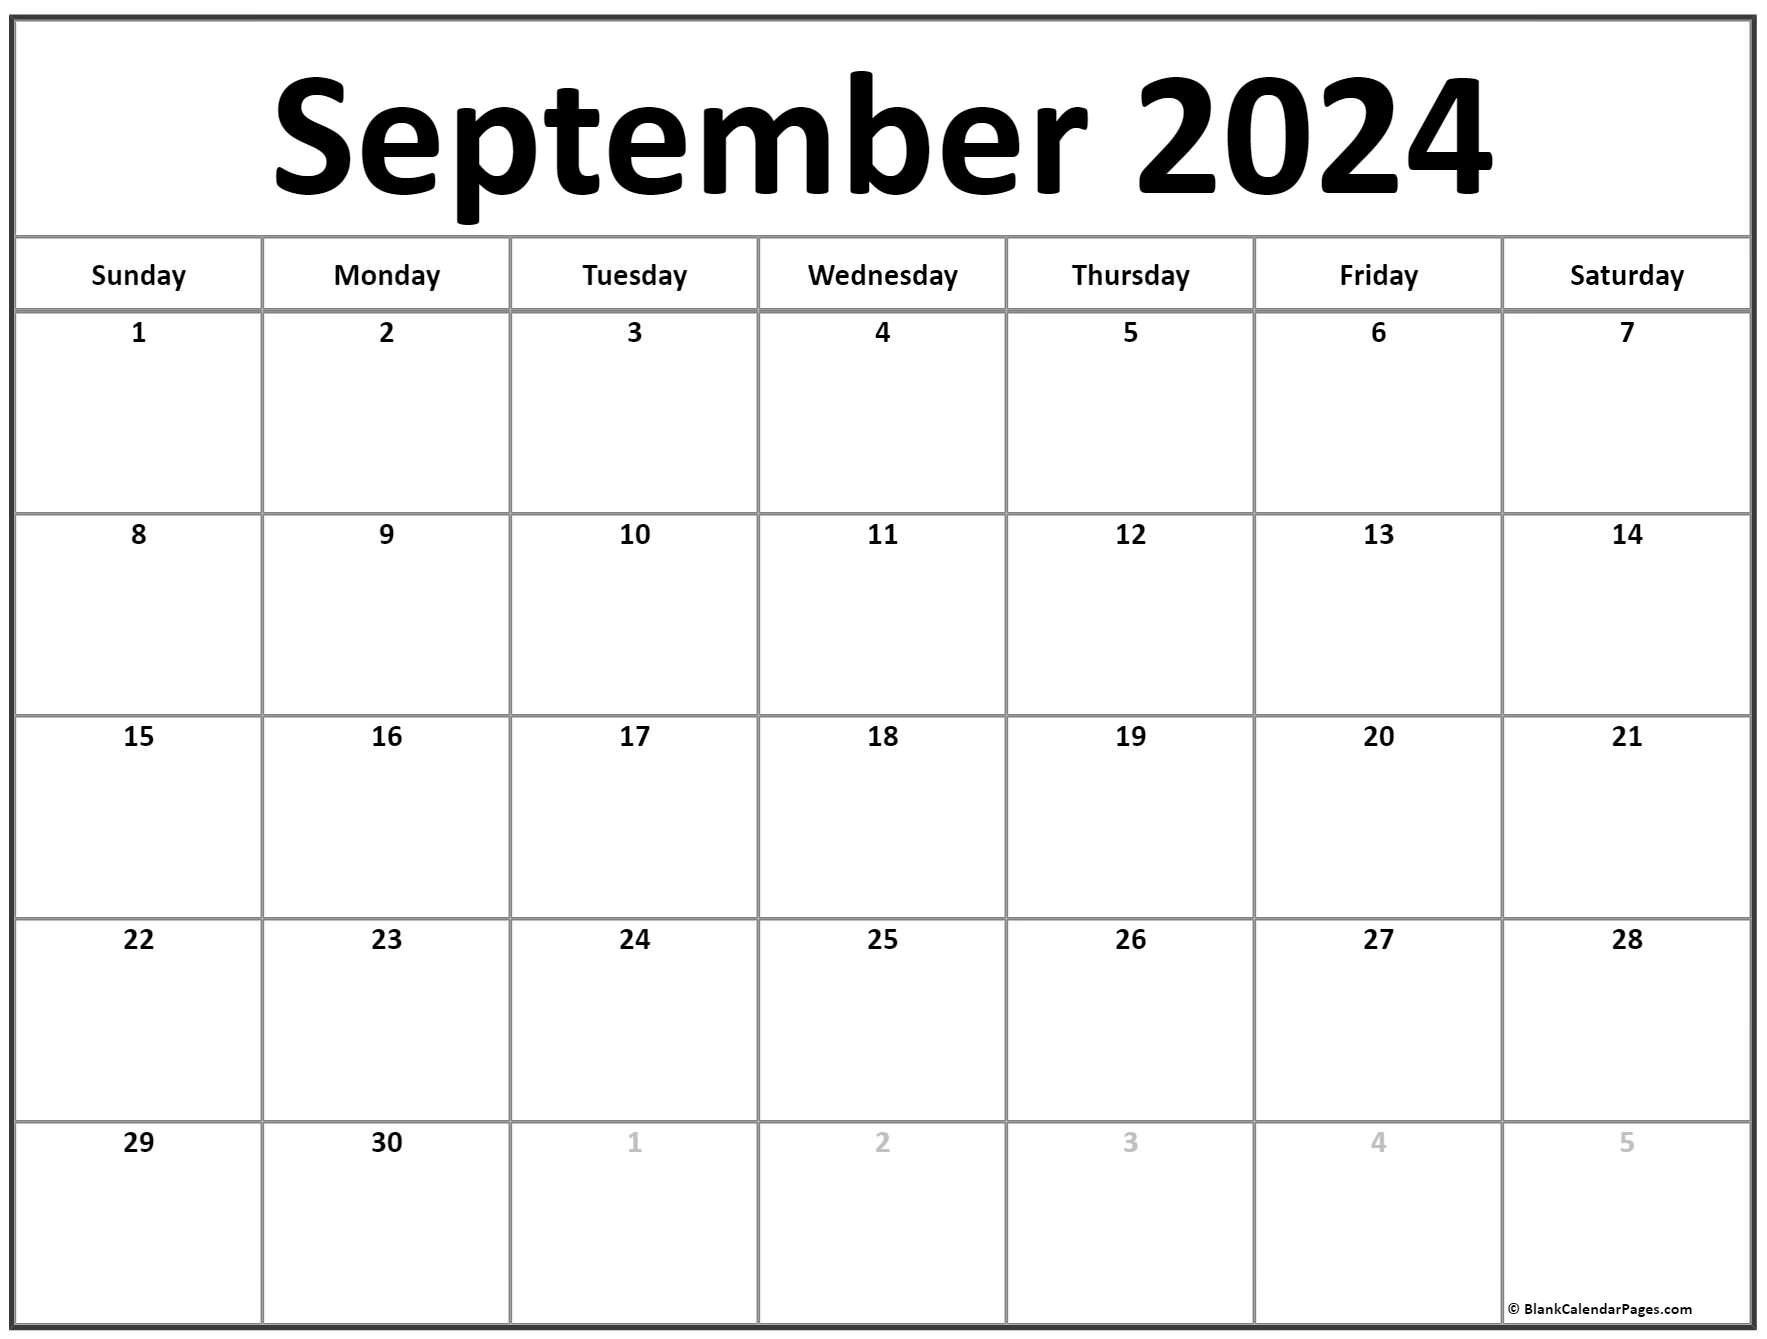 Sept 2022 Calendar Printable September 2022 Calendar | Free Printable Calendar Templates